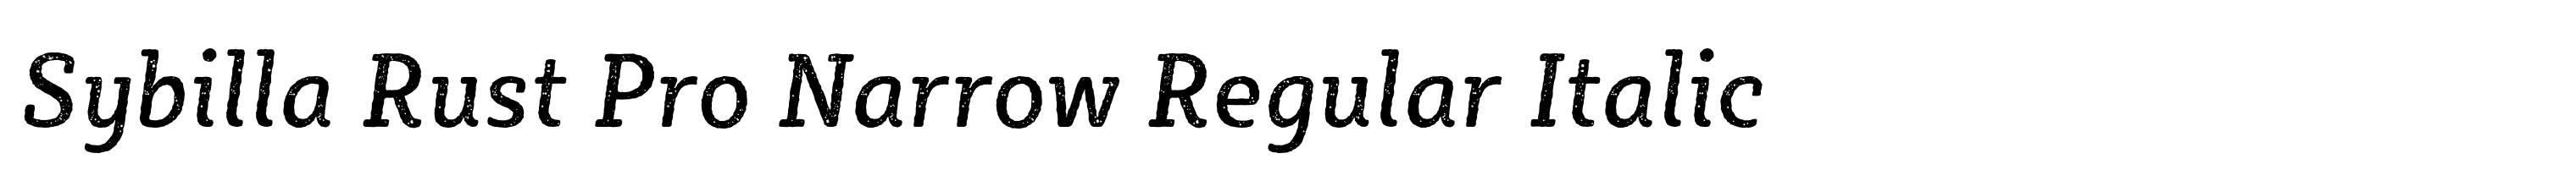 Sybilla Rust Pro Narrow Regular Italic